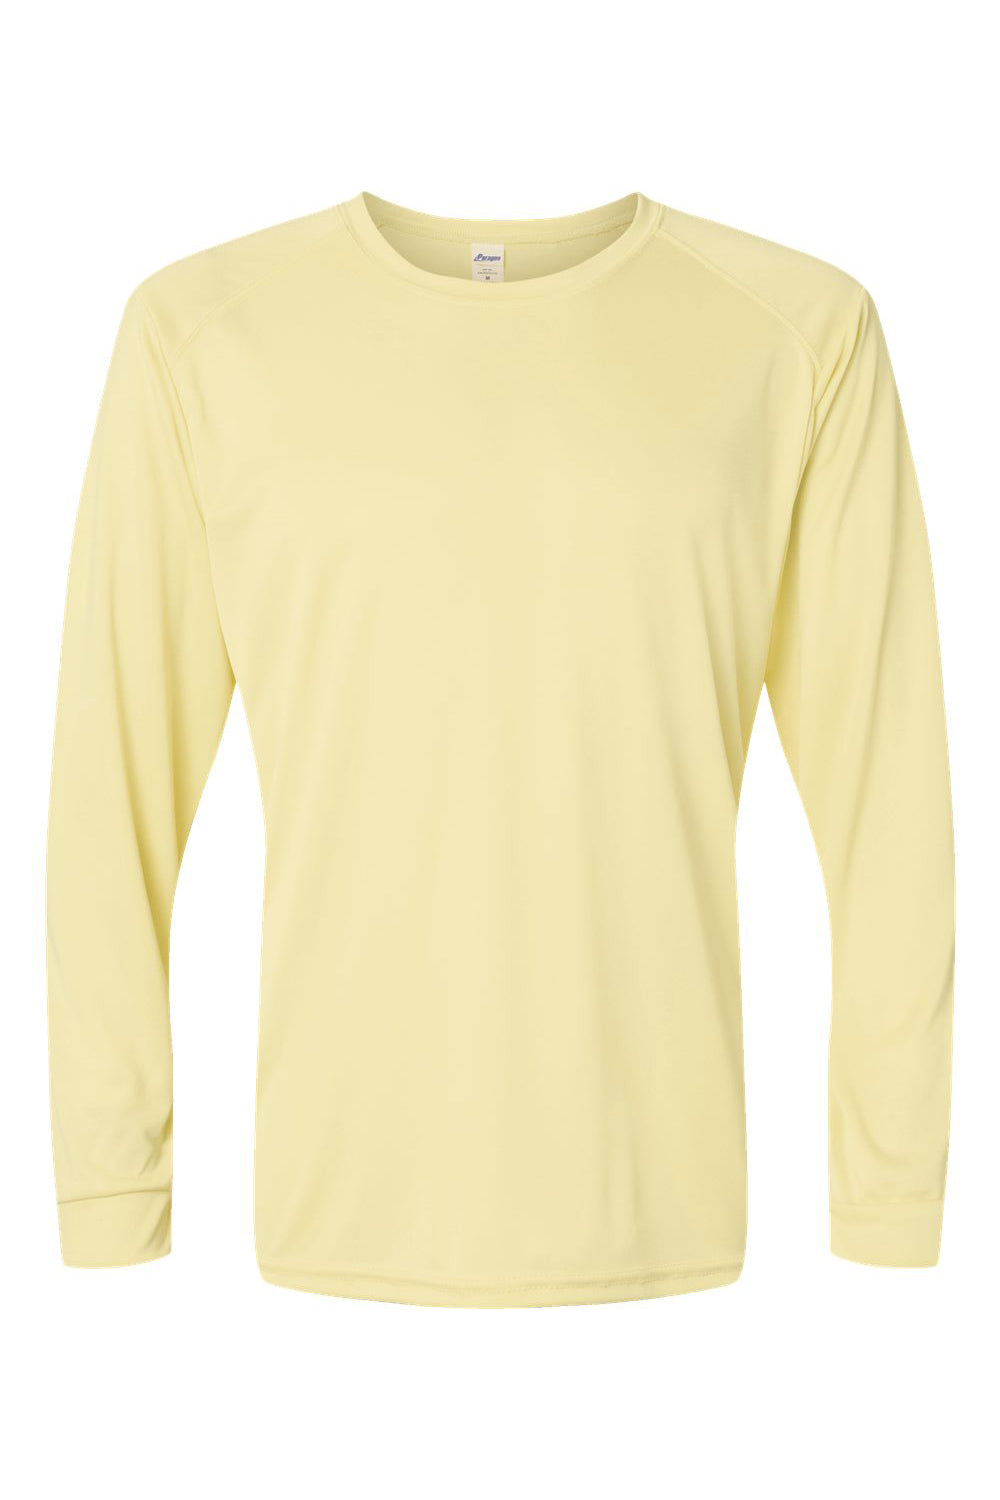 Paragon 210 Mens Islander Performance Long Sleeve Crewneck T-Shirt Pale Yellow Flat Front